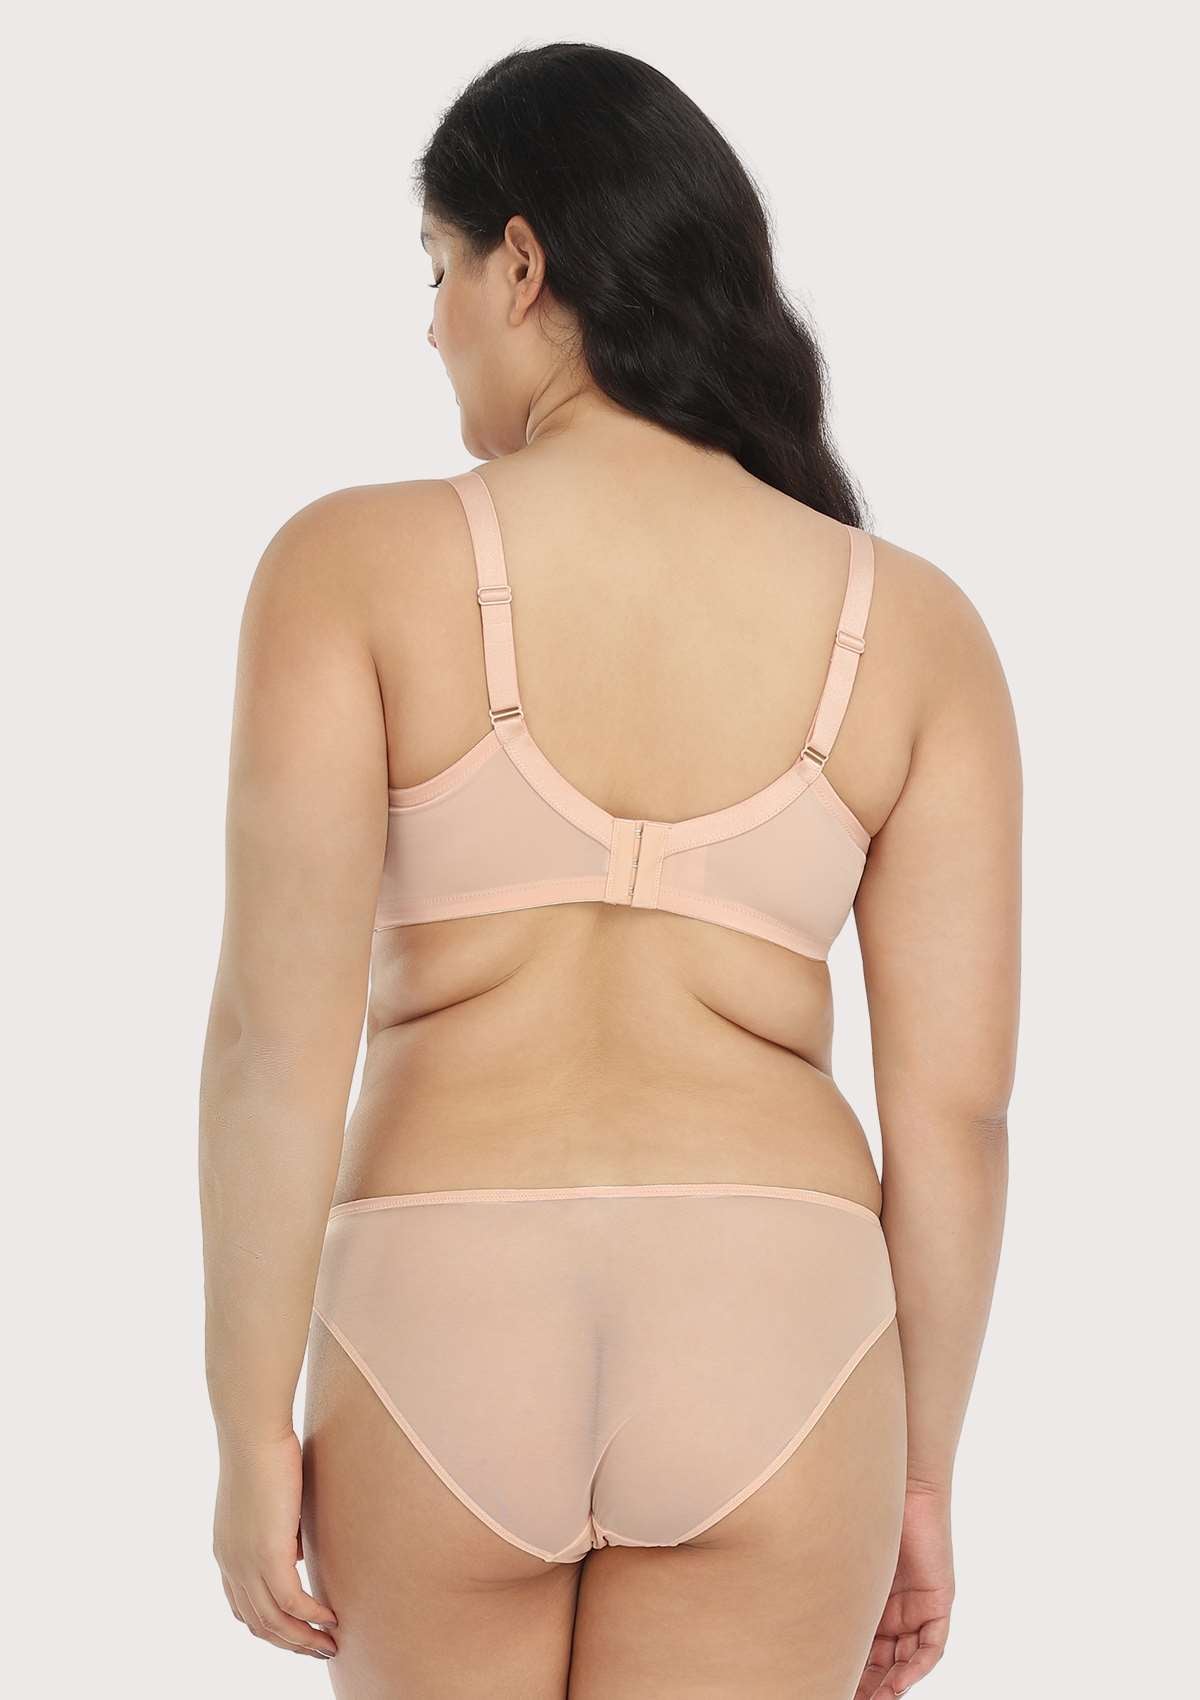 HSIA Sunflower Matching Bra And Panties Set: Comfortable Plus Size Bra - Pink / 44 / H